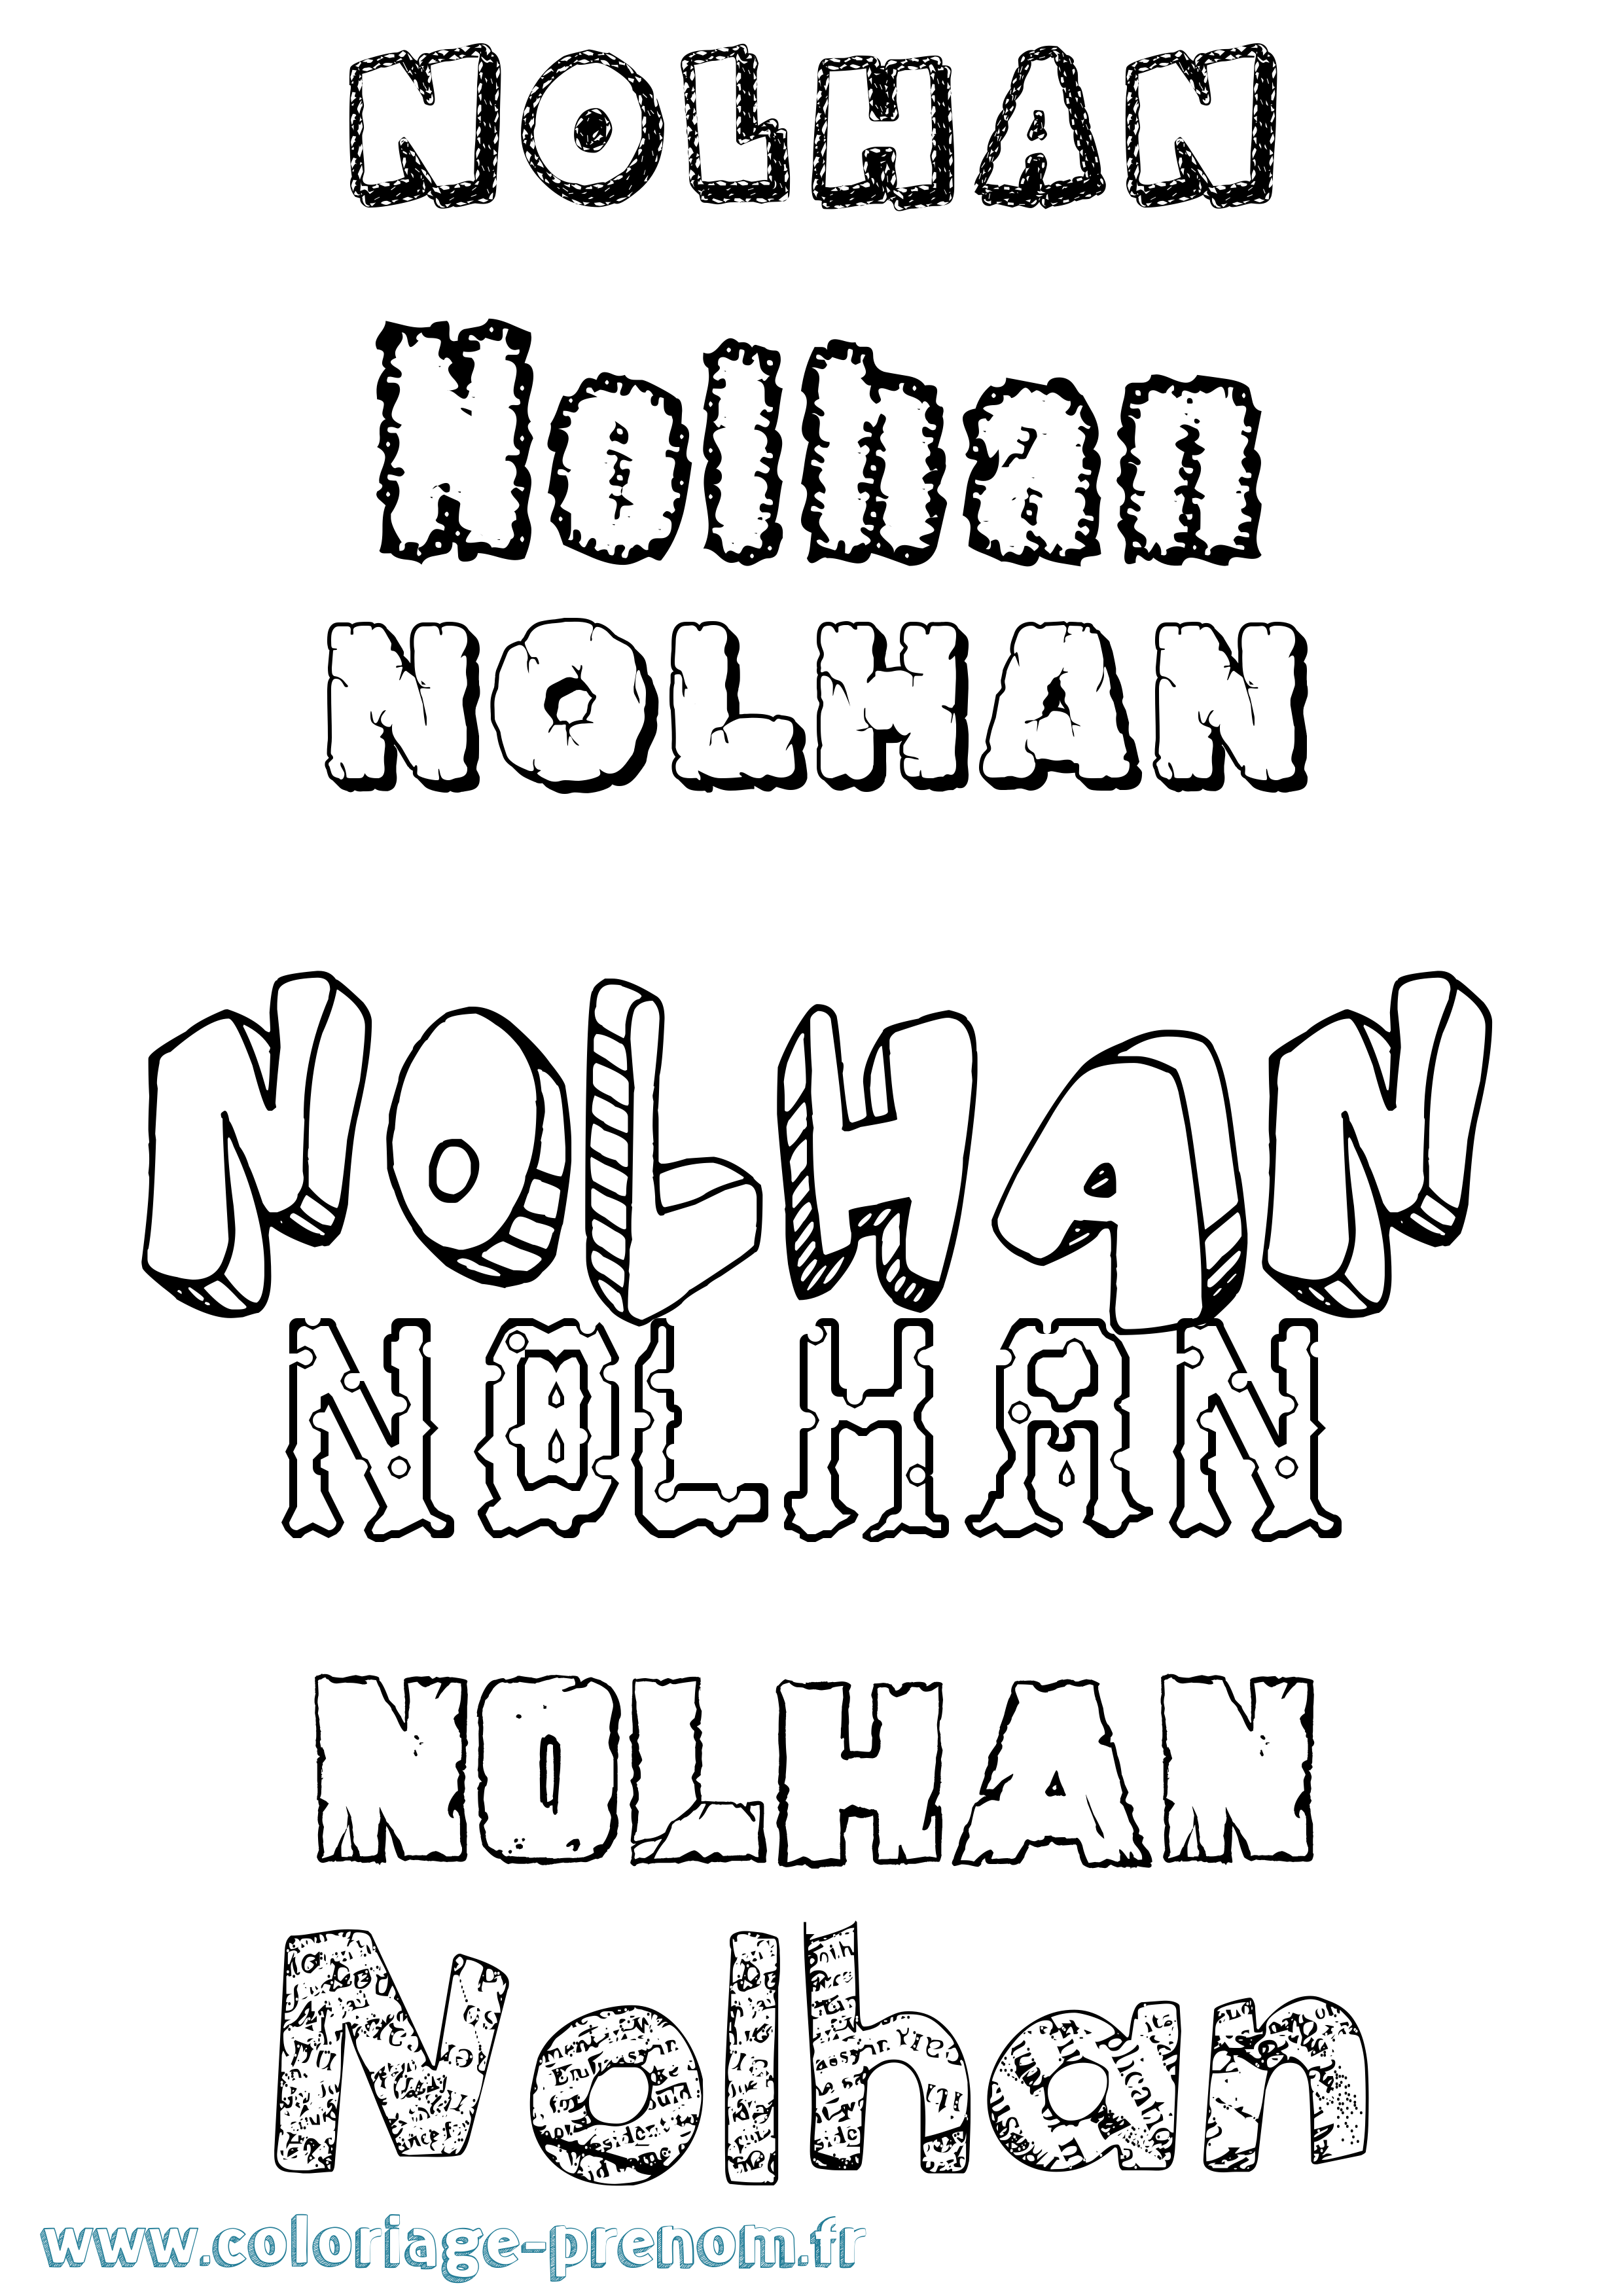 Coloriage prénom Nolhan